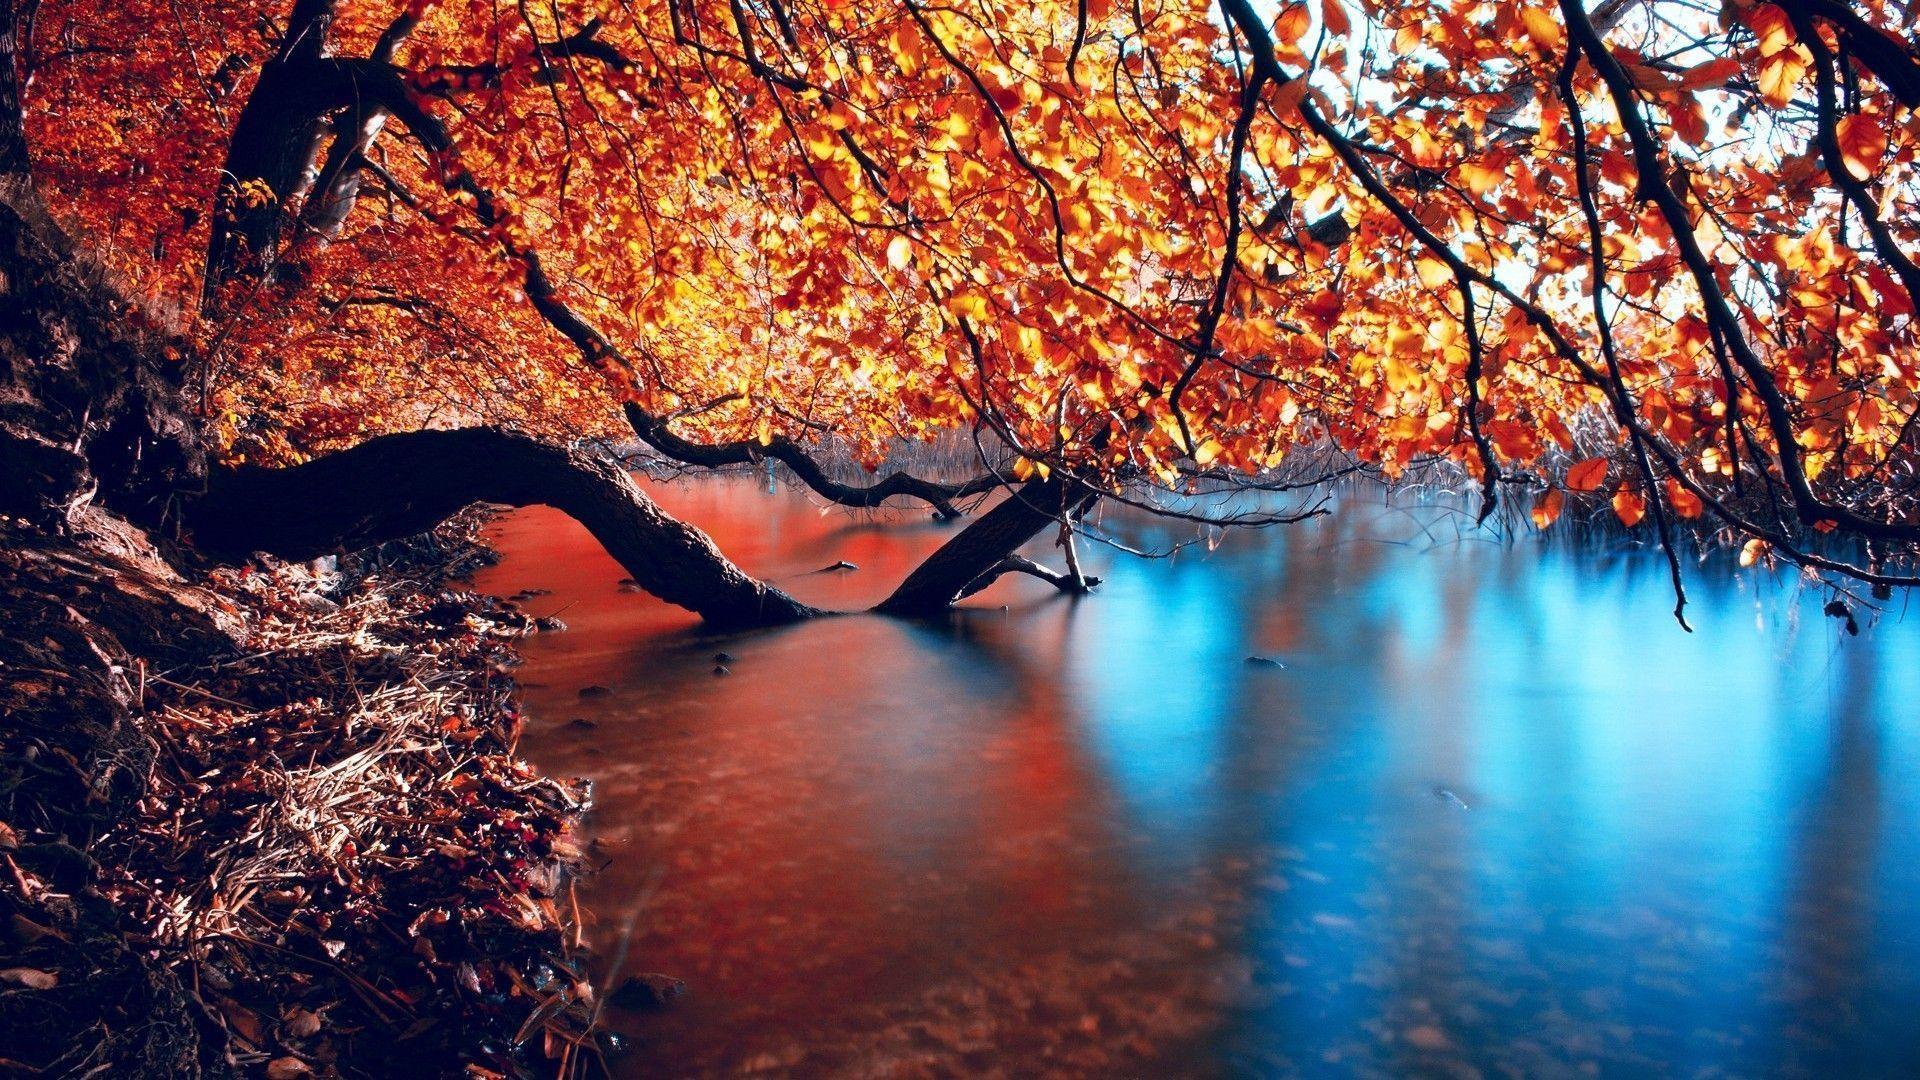 Hd Wallpaper Autumn Lake Full Desktop 1080p 1920×1080 Wallpaper